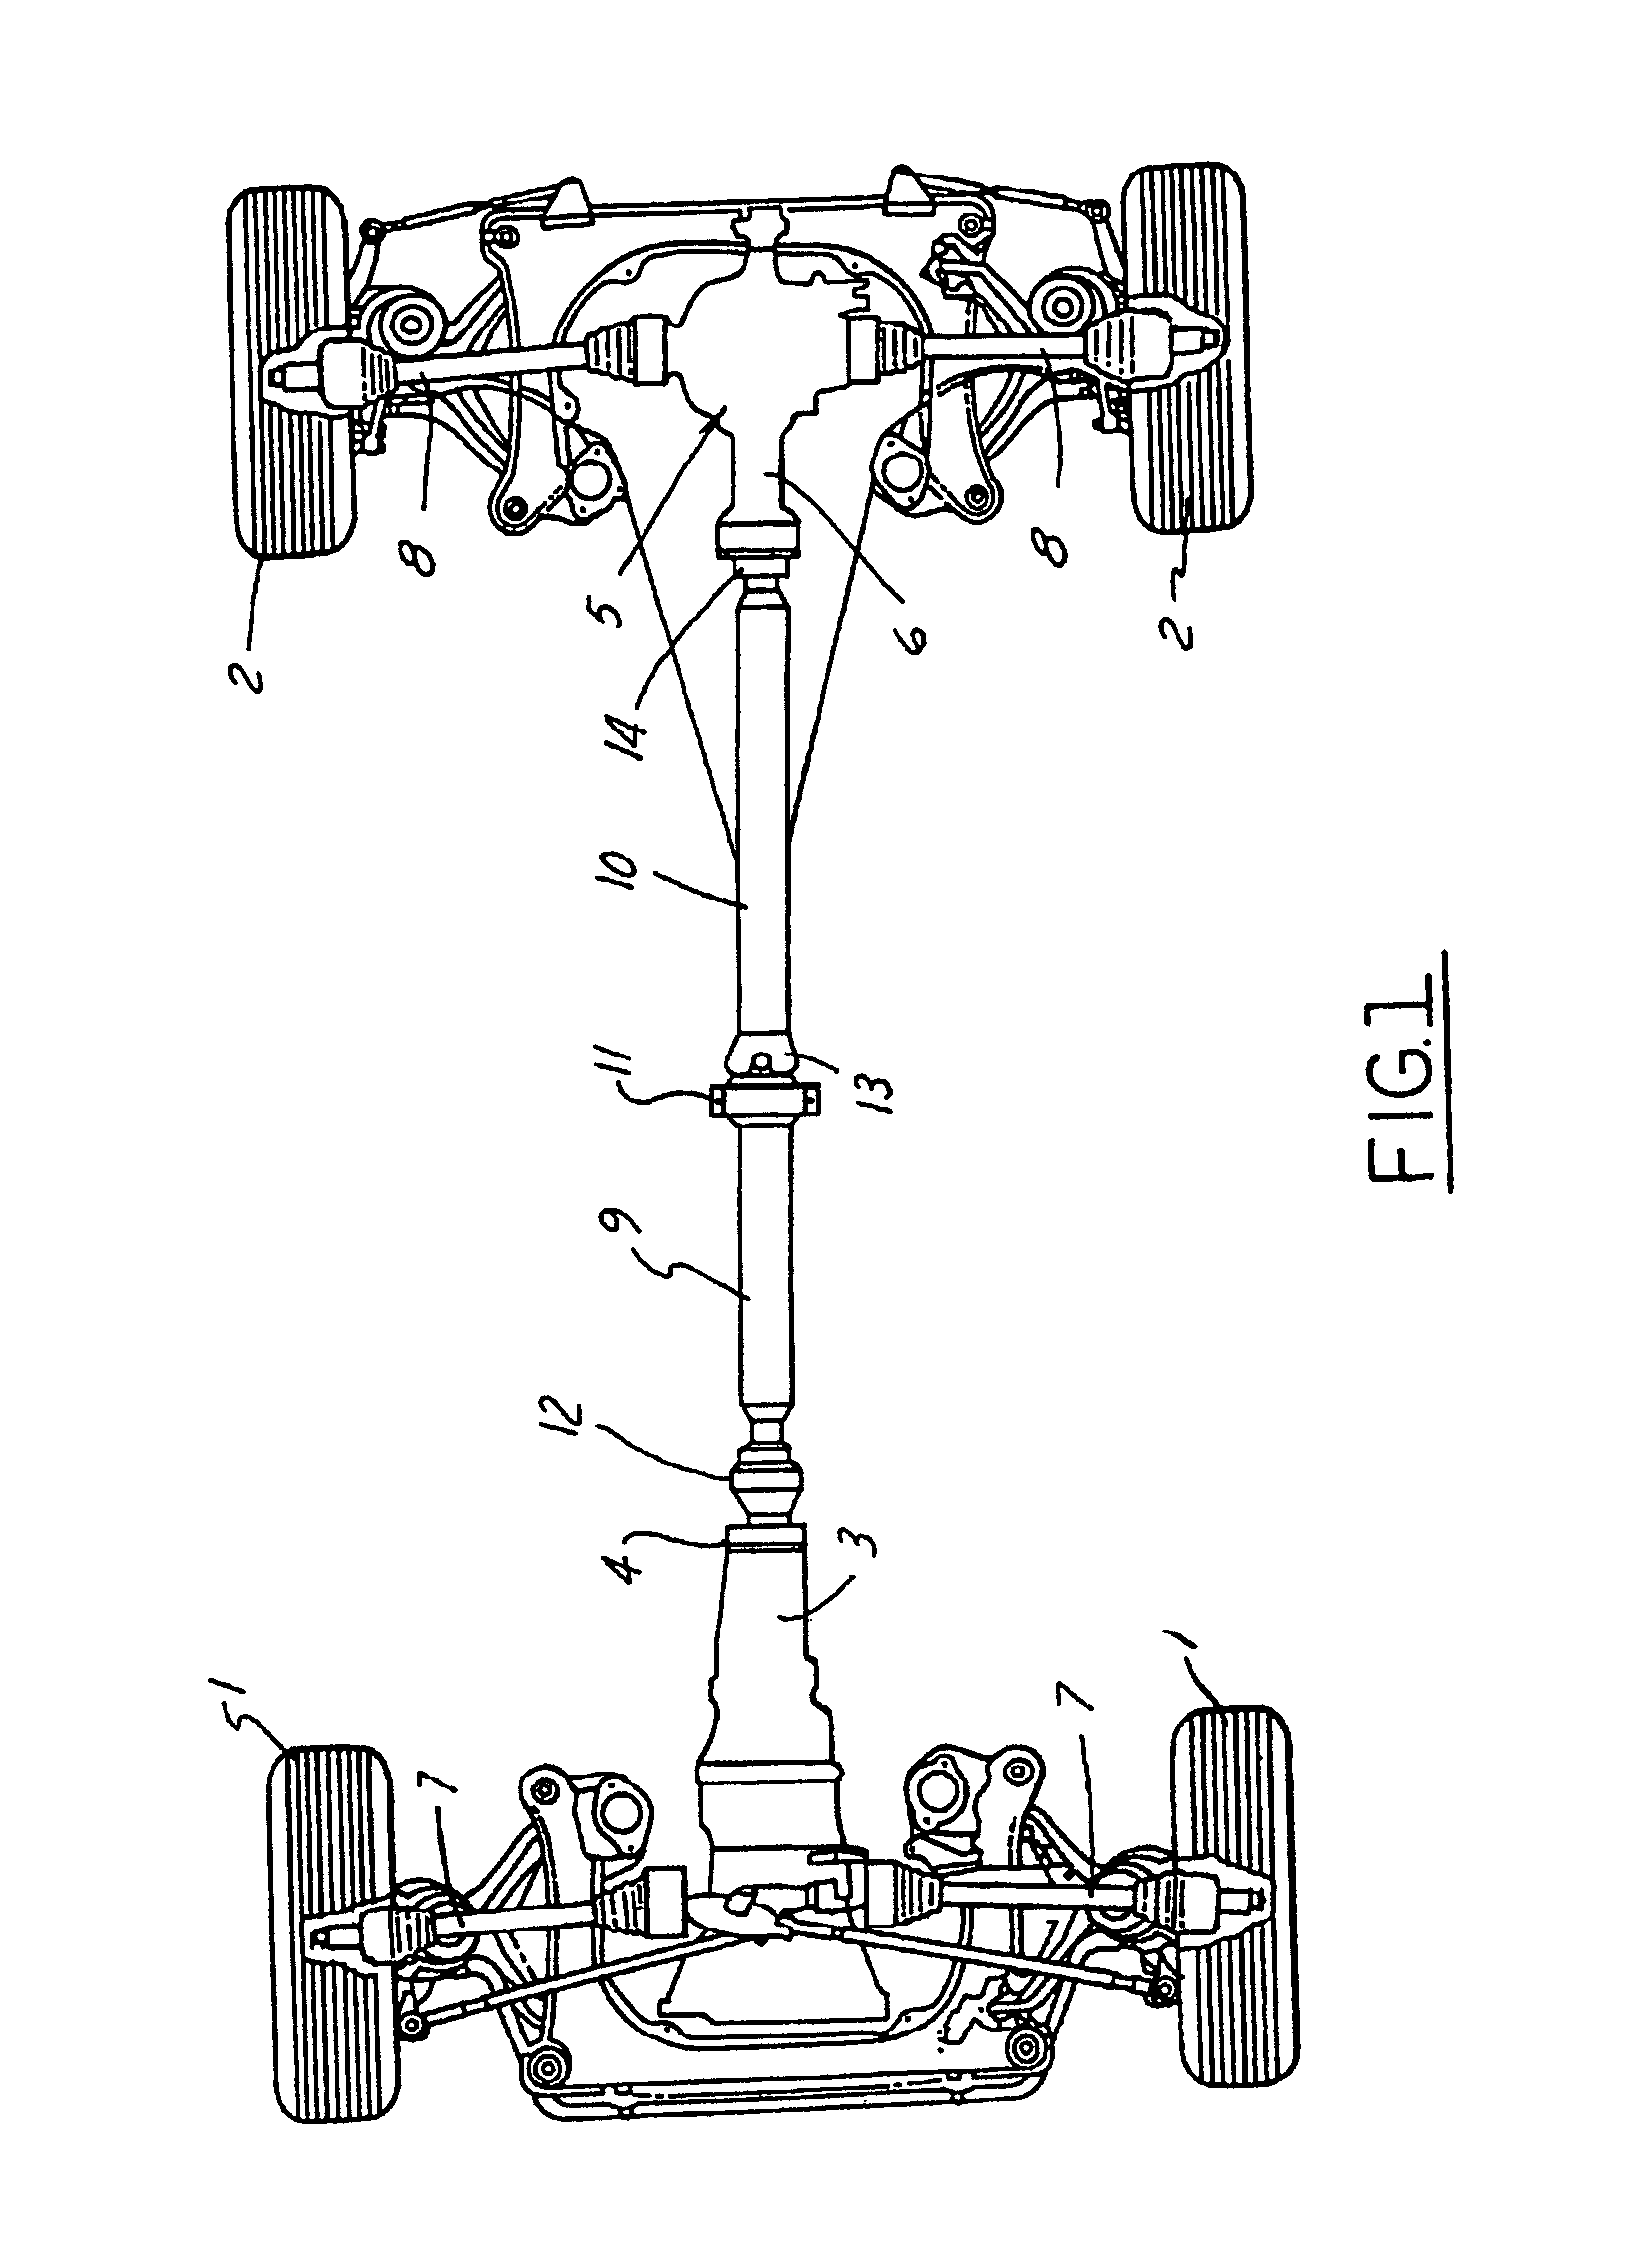 Propeller shaft